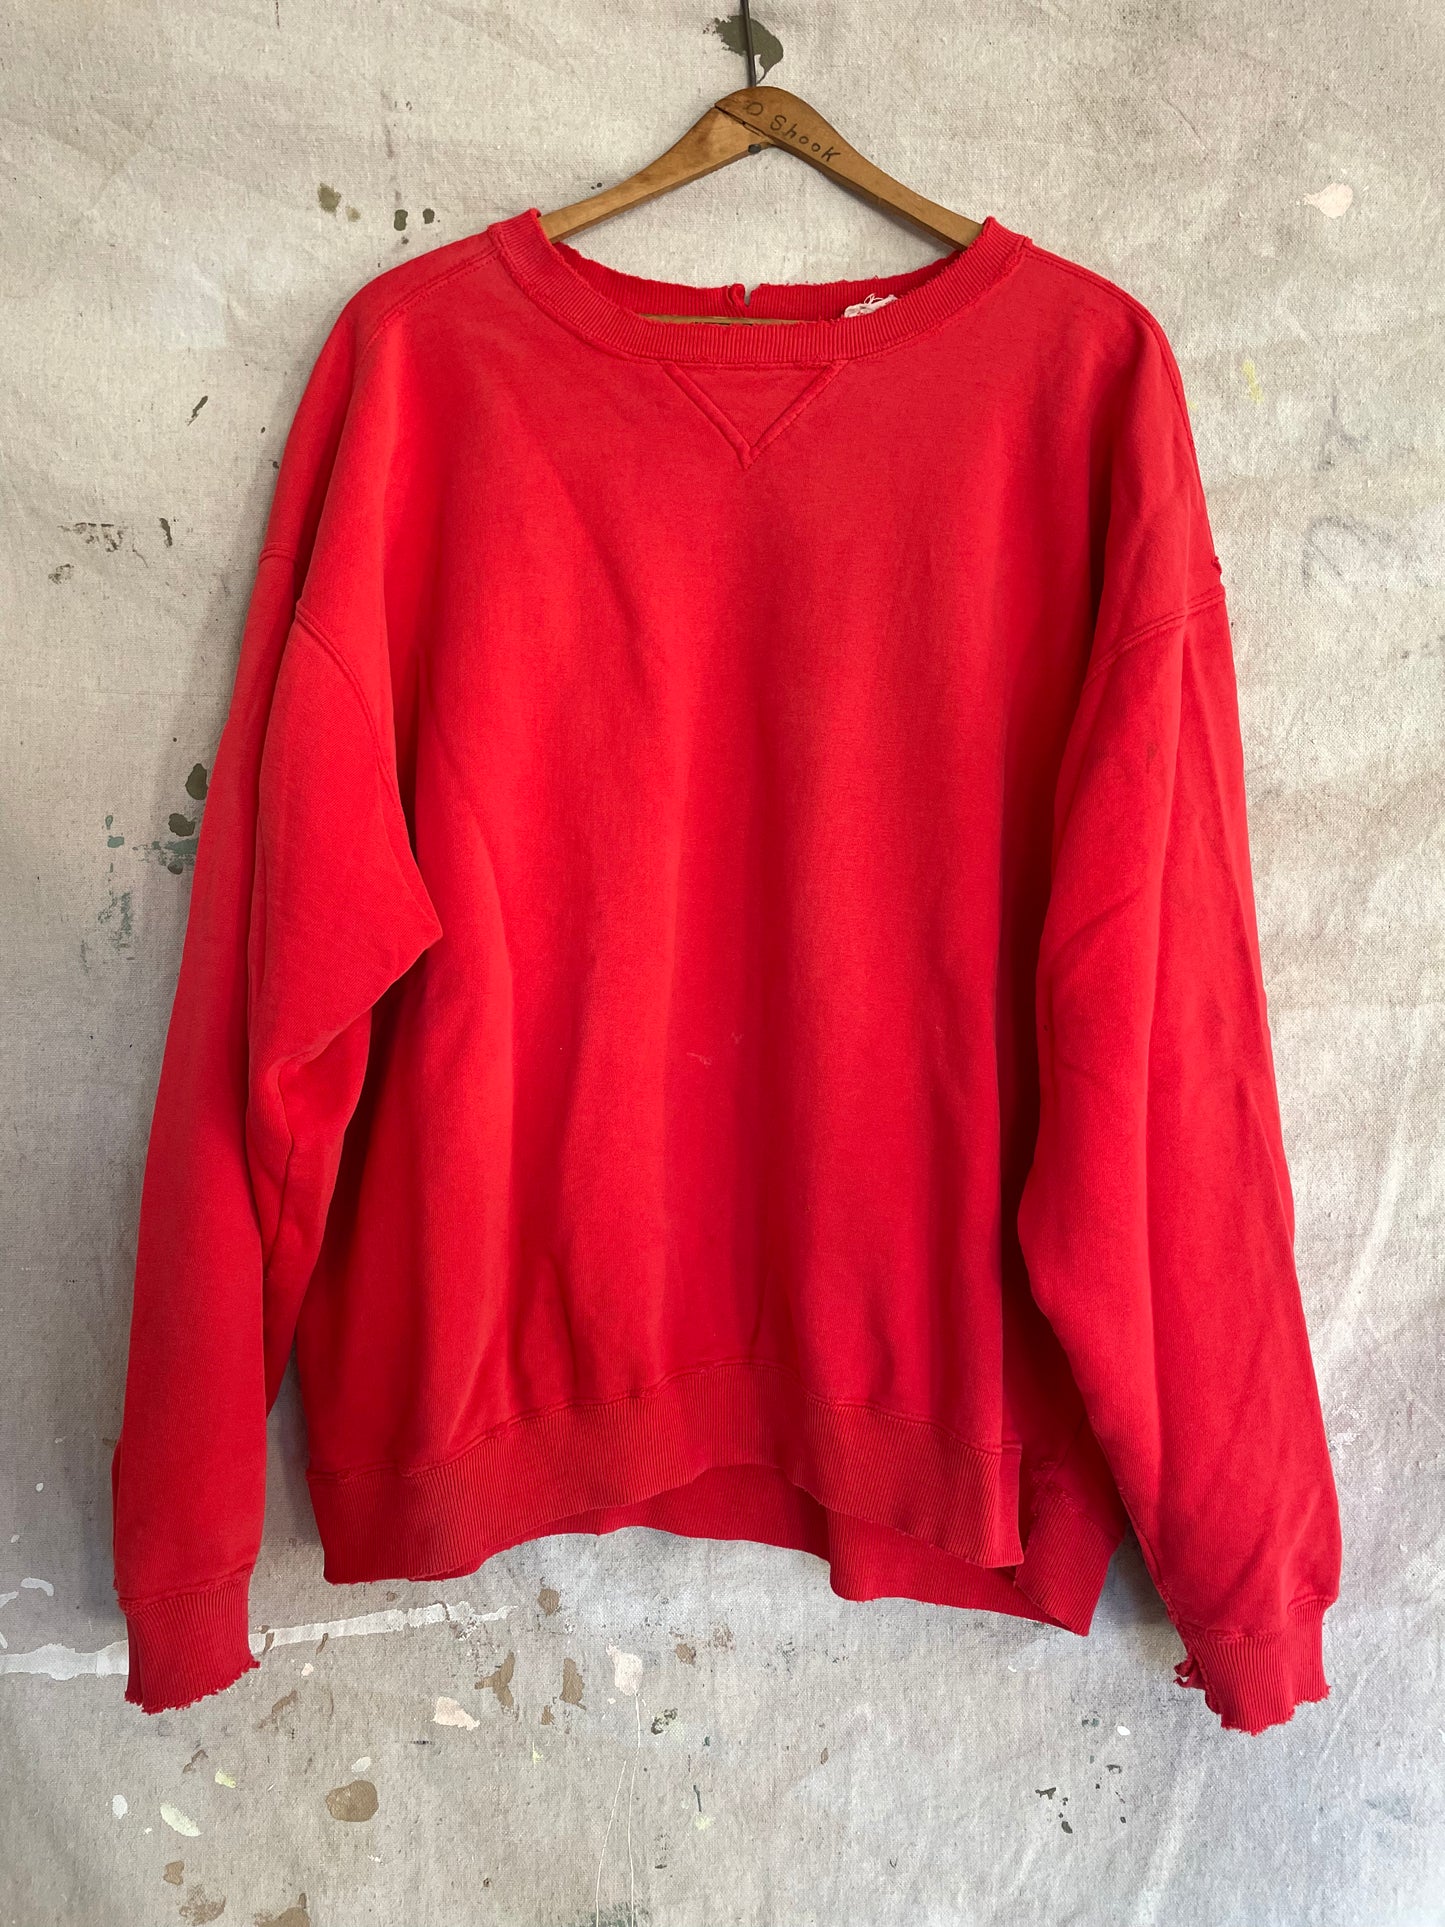 90s Blank Red Gap Sweatshirt